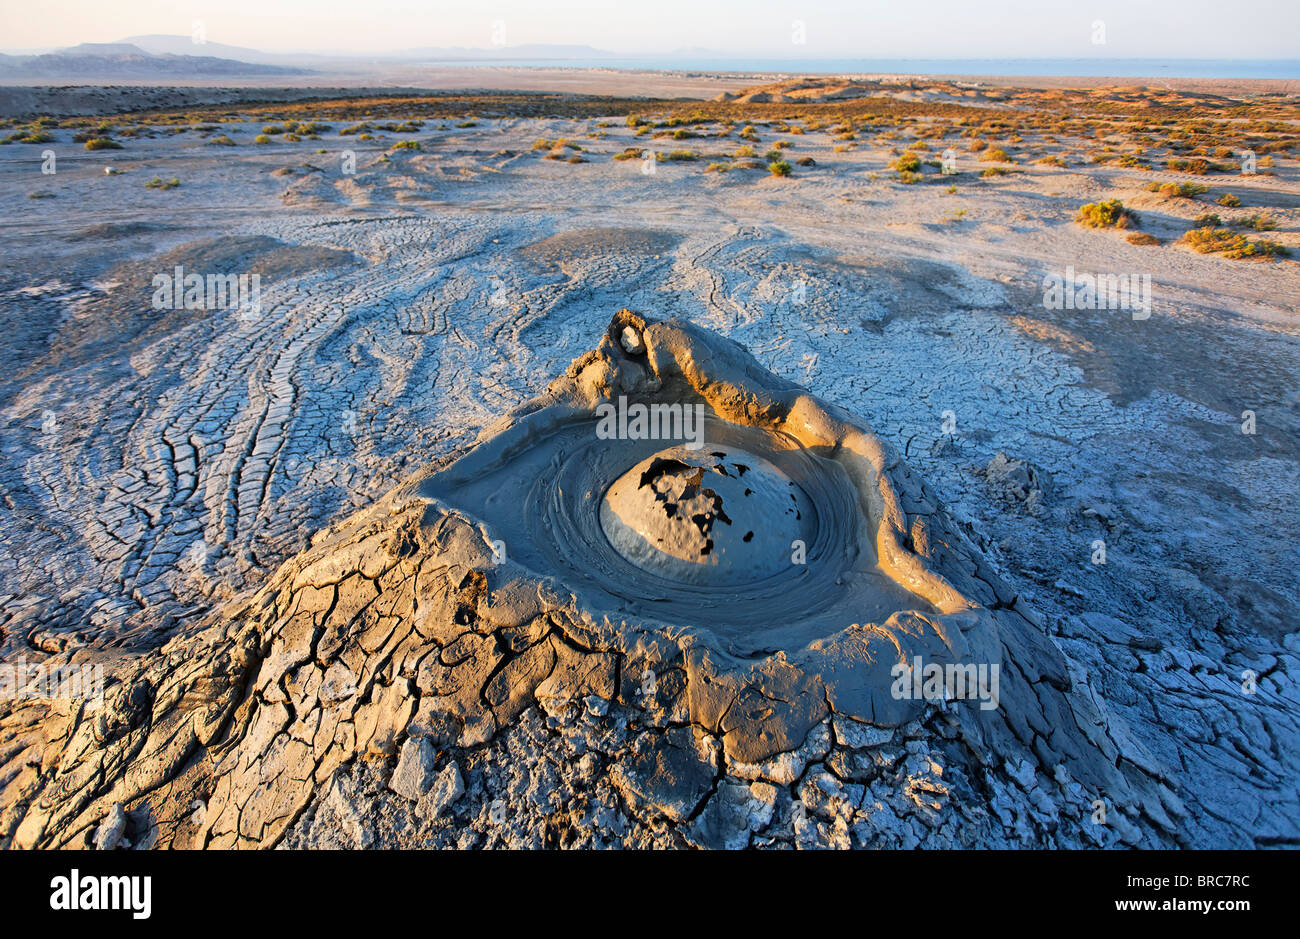 Mud erupting from a mud volcano, Qobustan, Azerbaijan Stock Photo